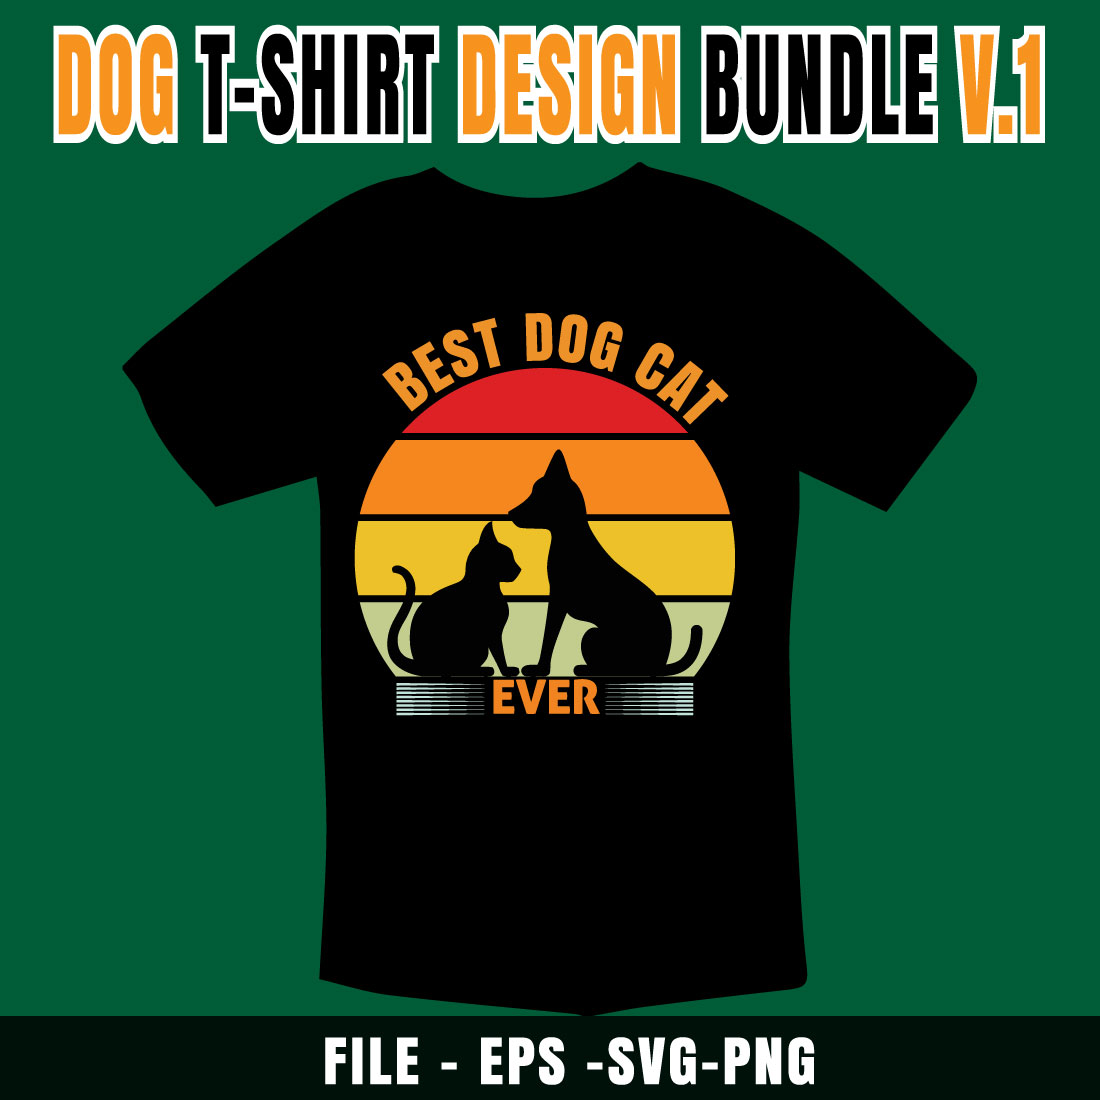 Dog T-shirt Design Bundle preview image.